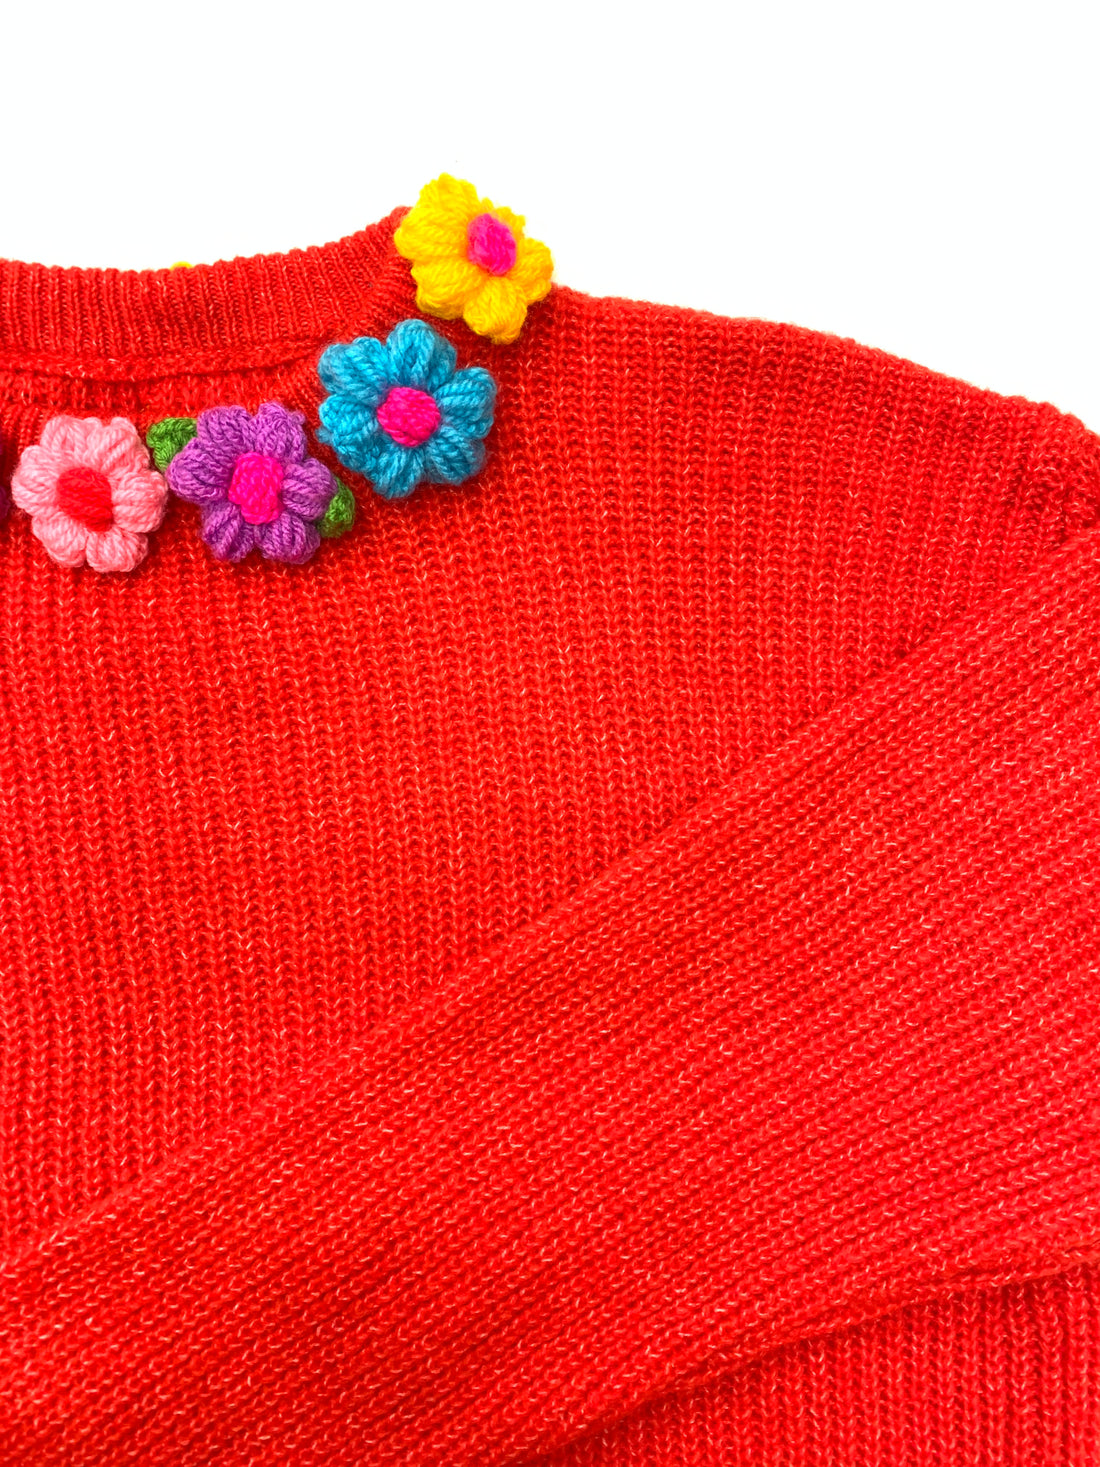 Floral Collar Red Jumper